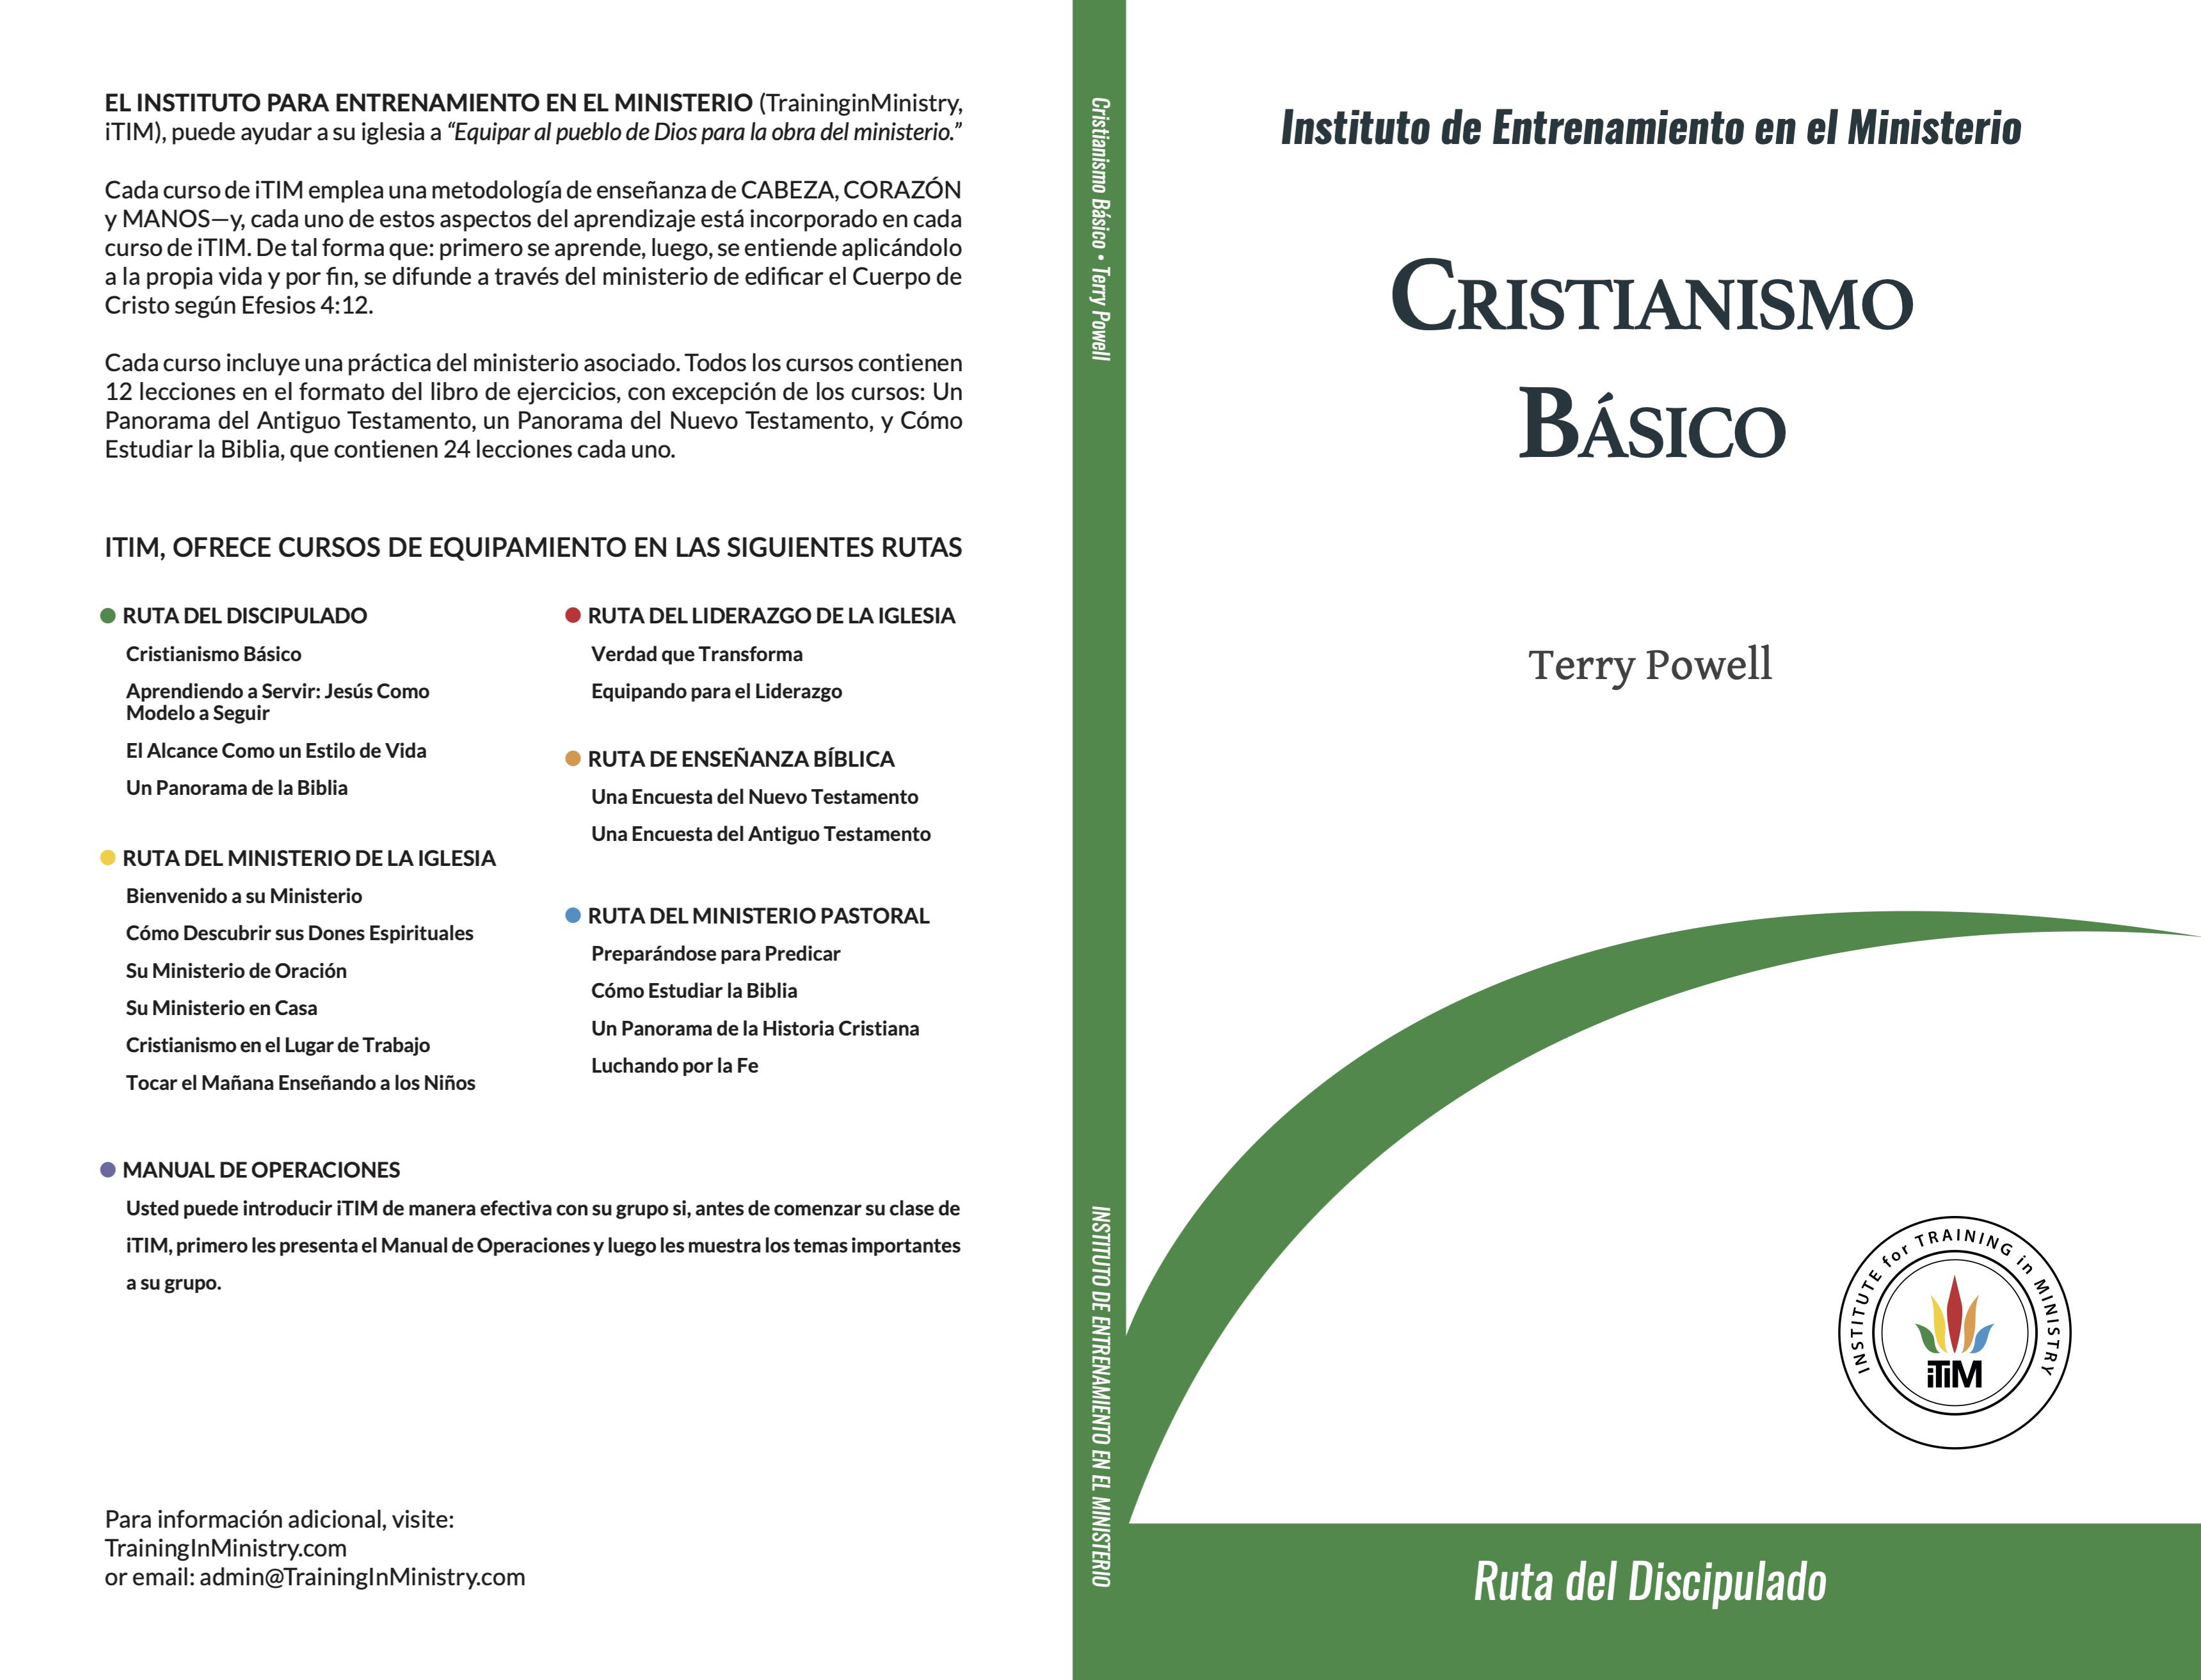 Christianismo Basico cover image